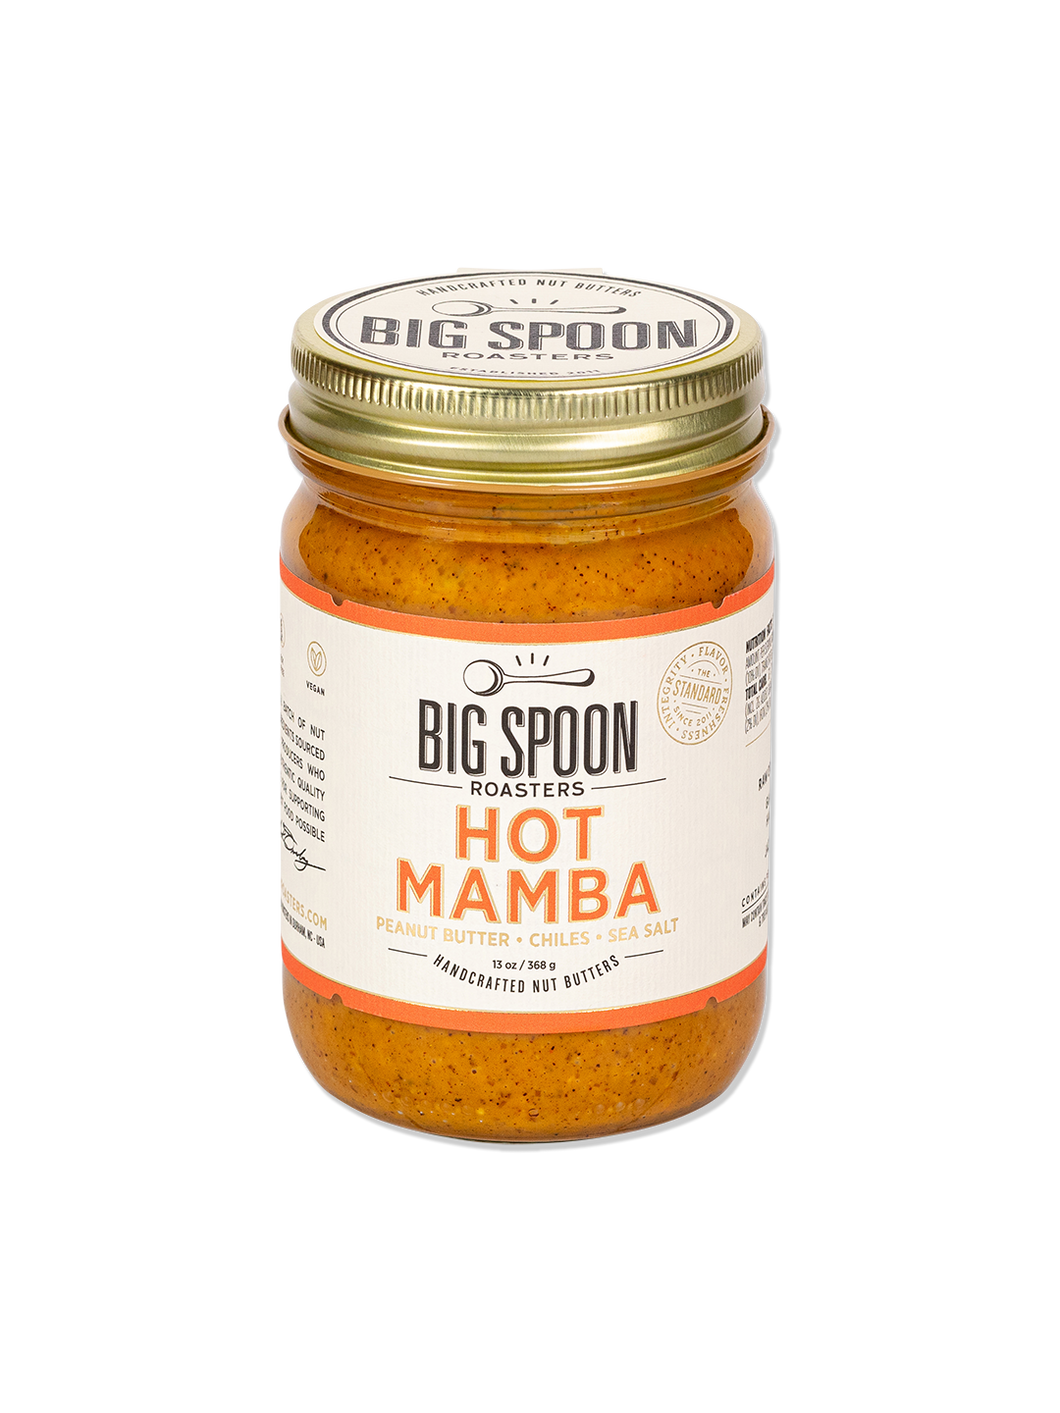 Big Spoon Roasters - Hot Mamba Peanut Butter